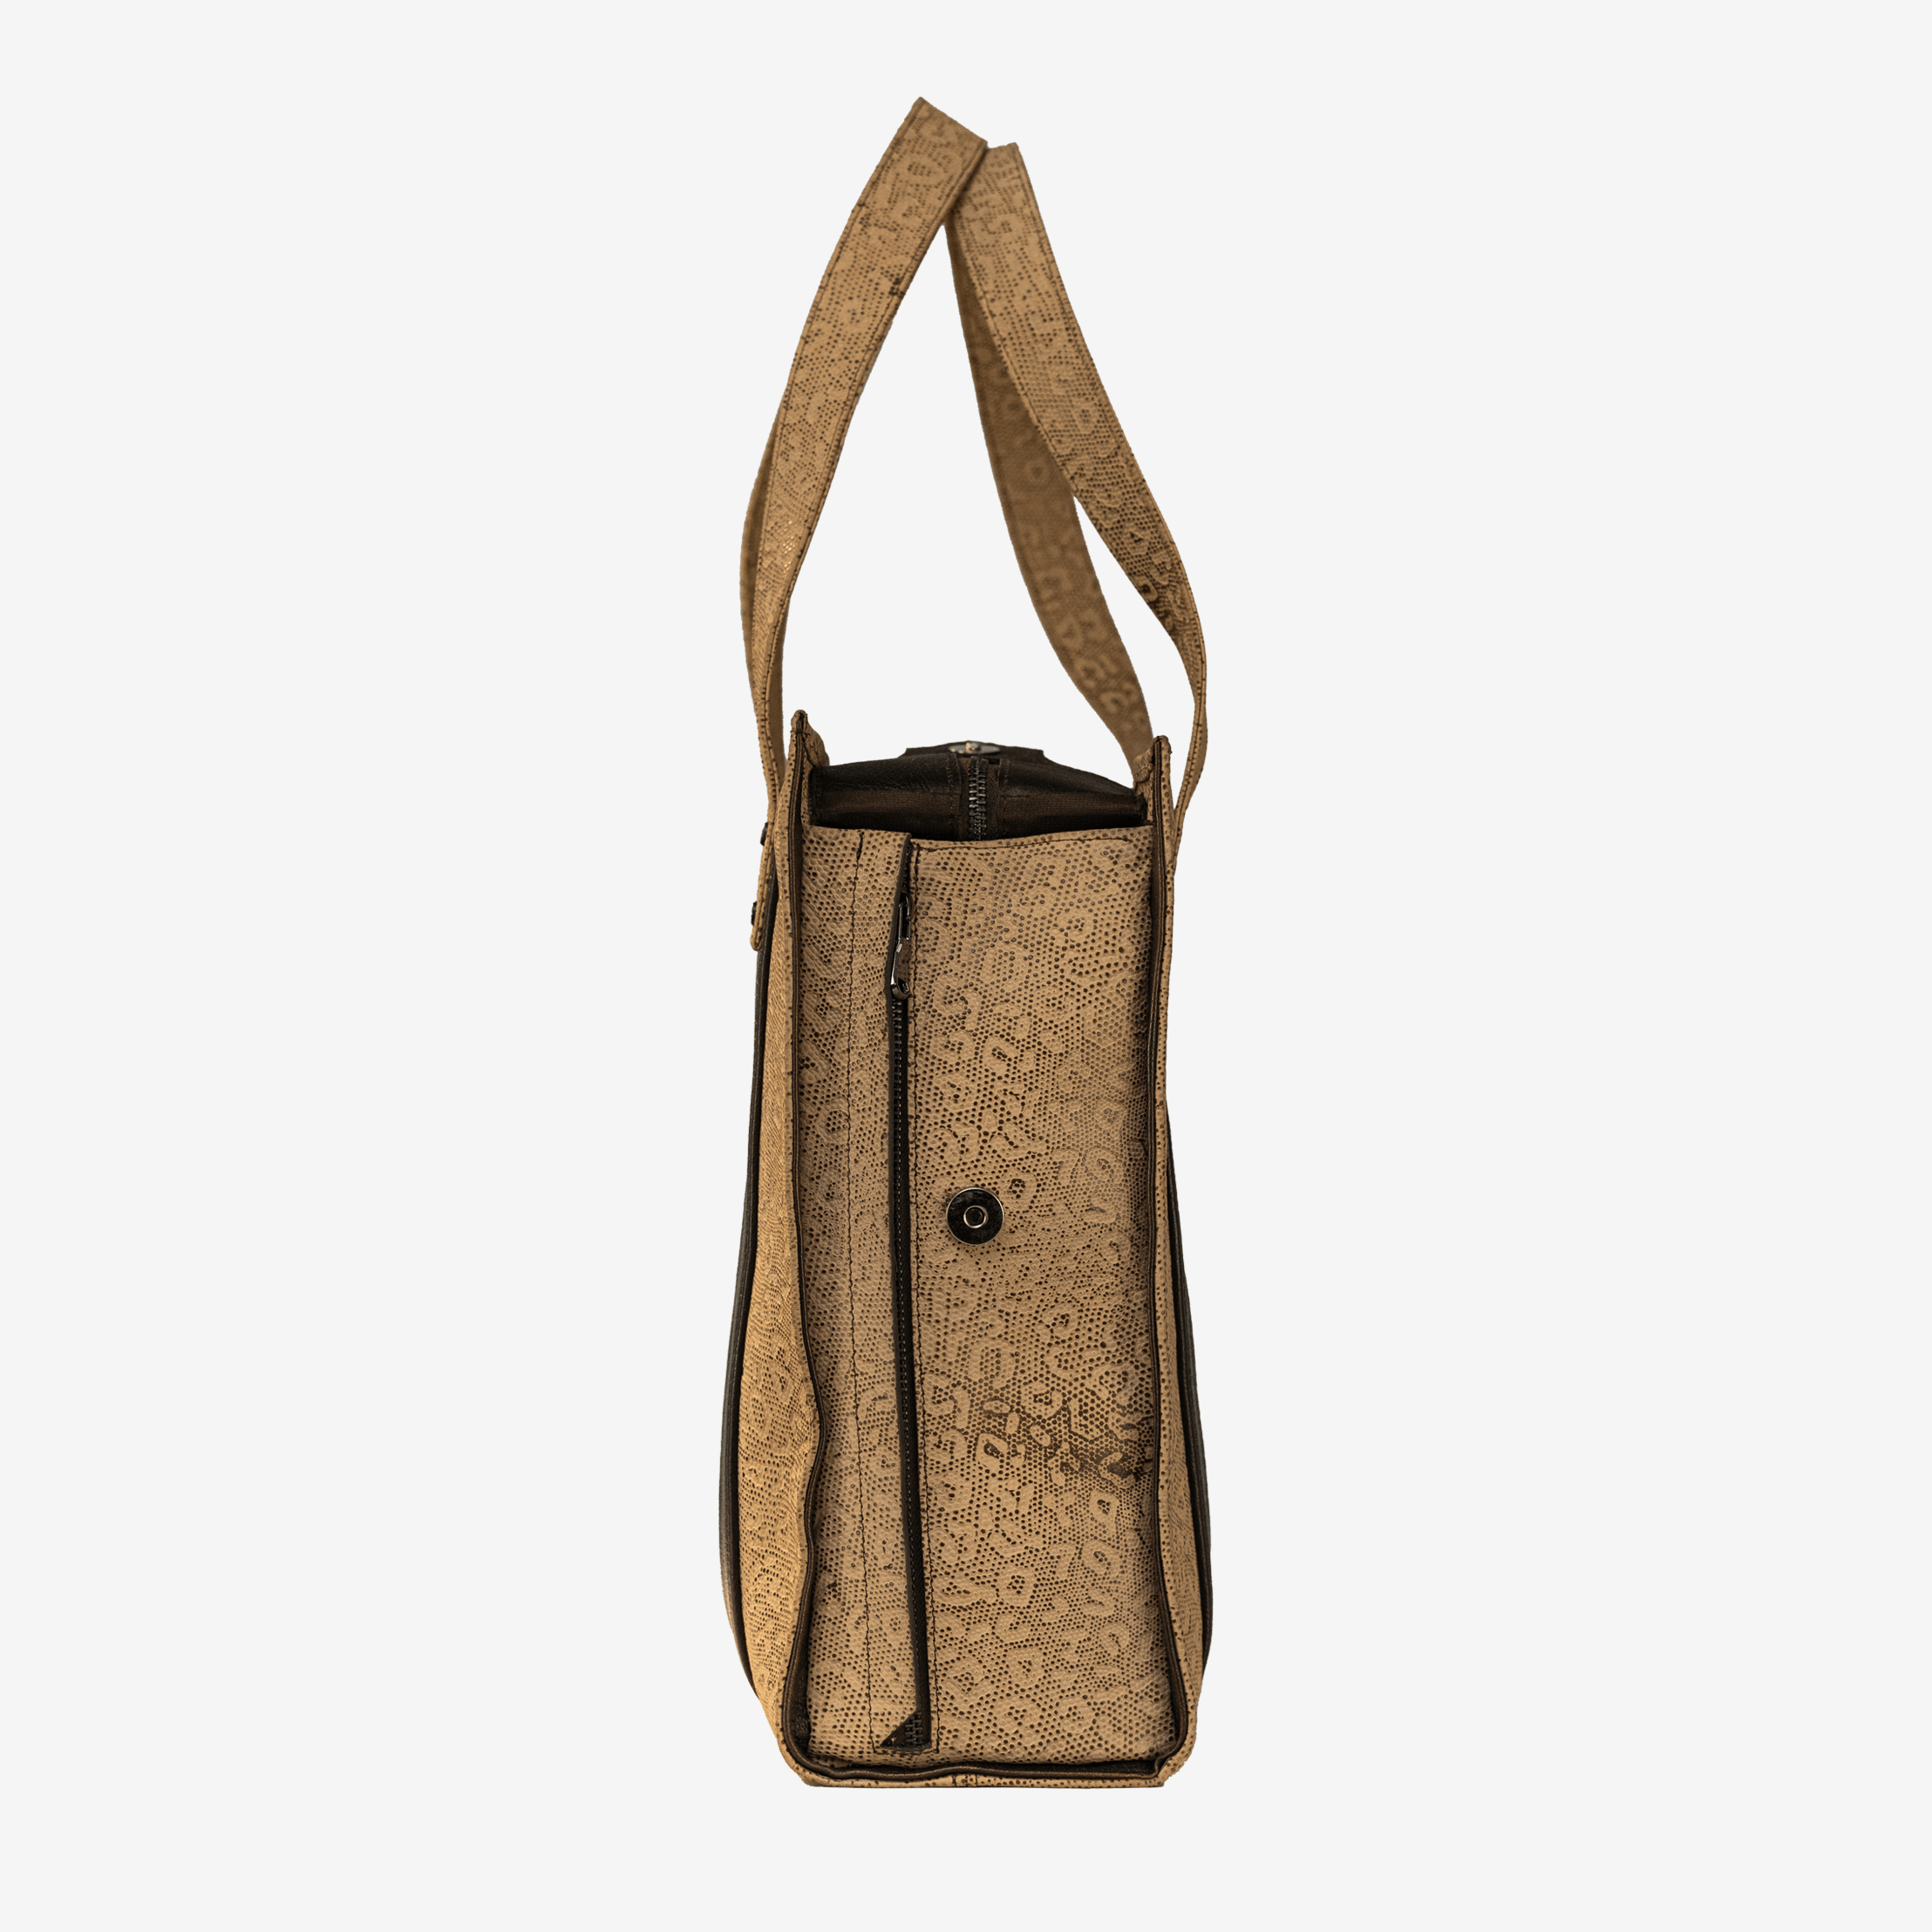 Veneno Leather Goods Tote bag - ELENA BROWN (Laptop)